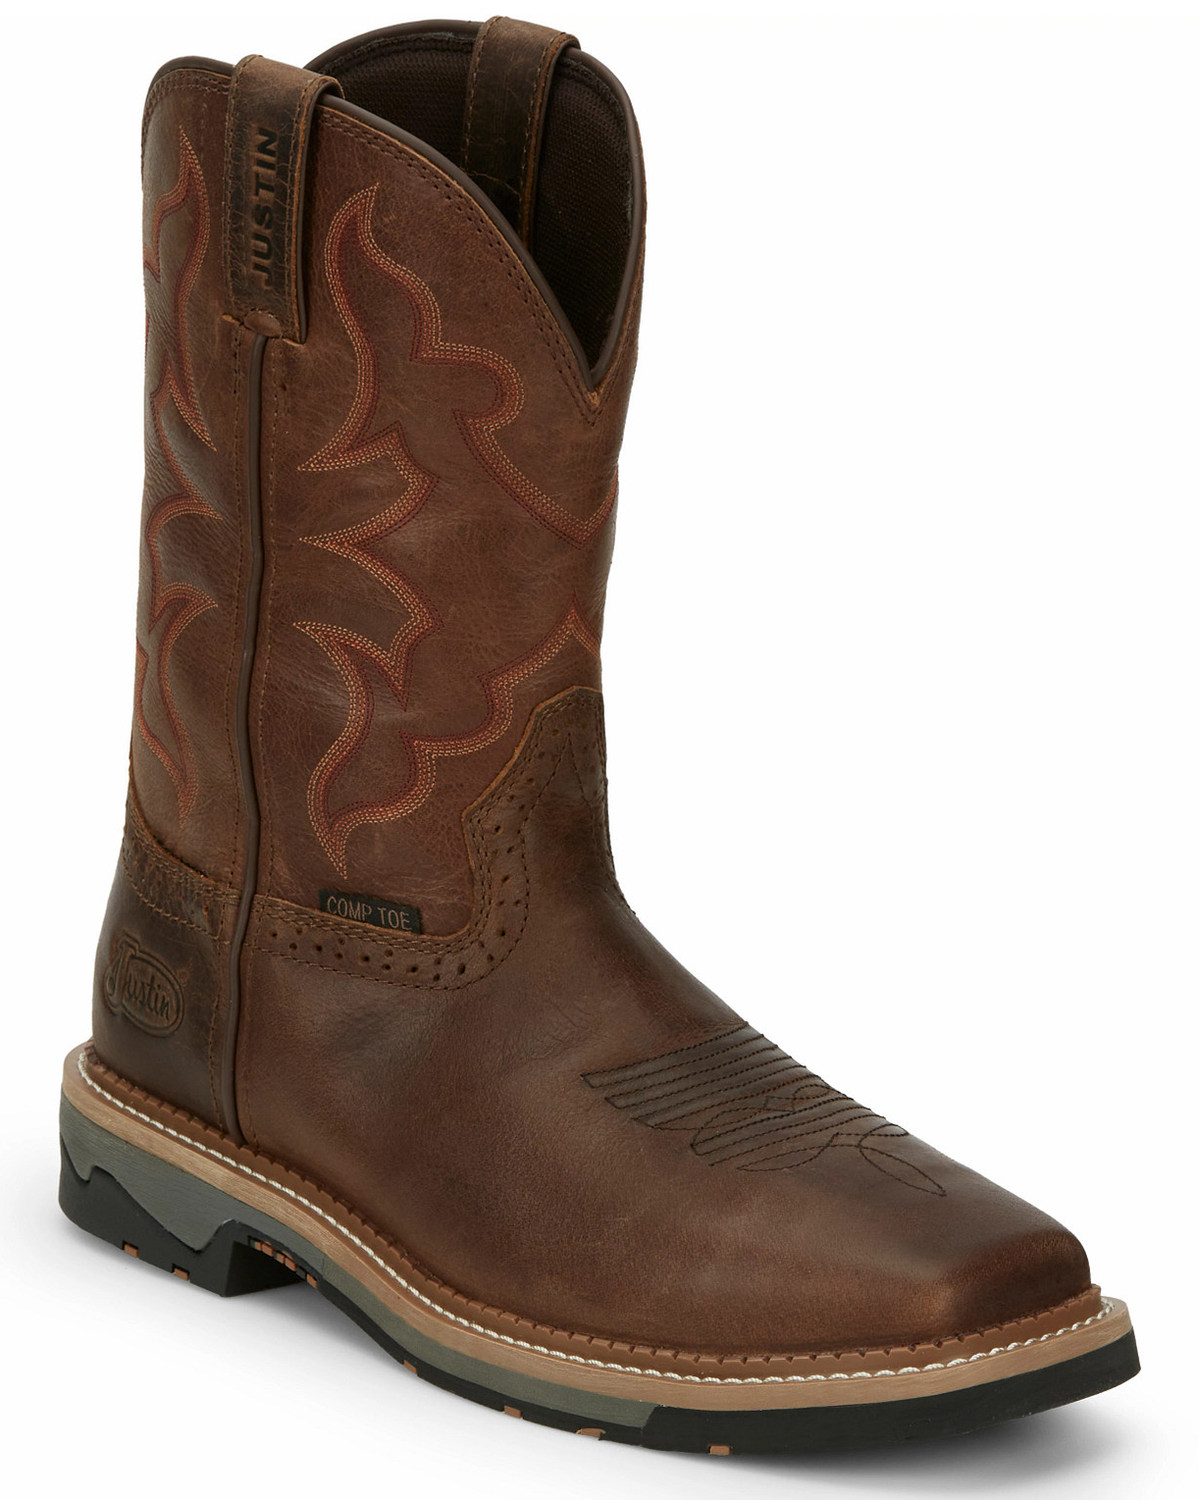 Justin Men's Carbide Western Work Boots - Composite Toe